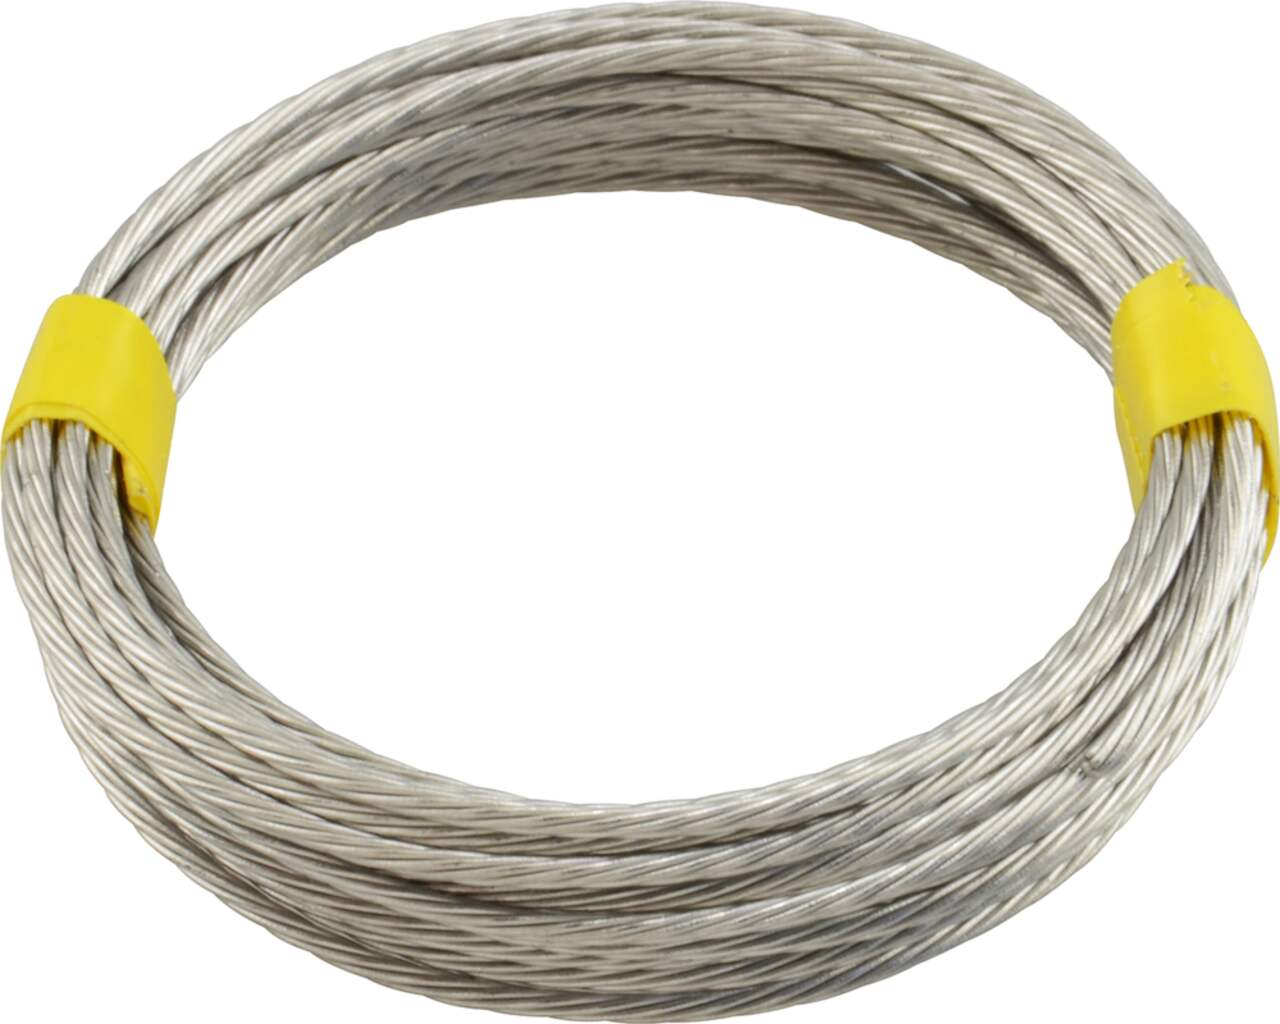 Câble métallique en acier inoxydable de 12 000 lb, diamètre 9,1 mm